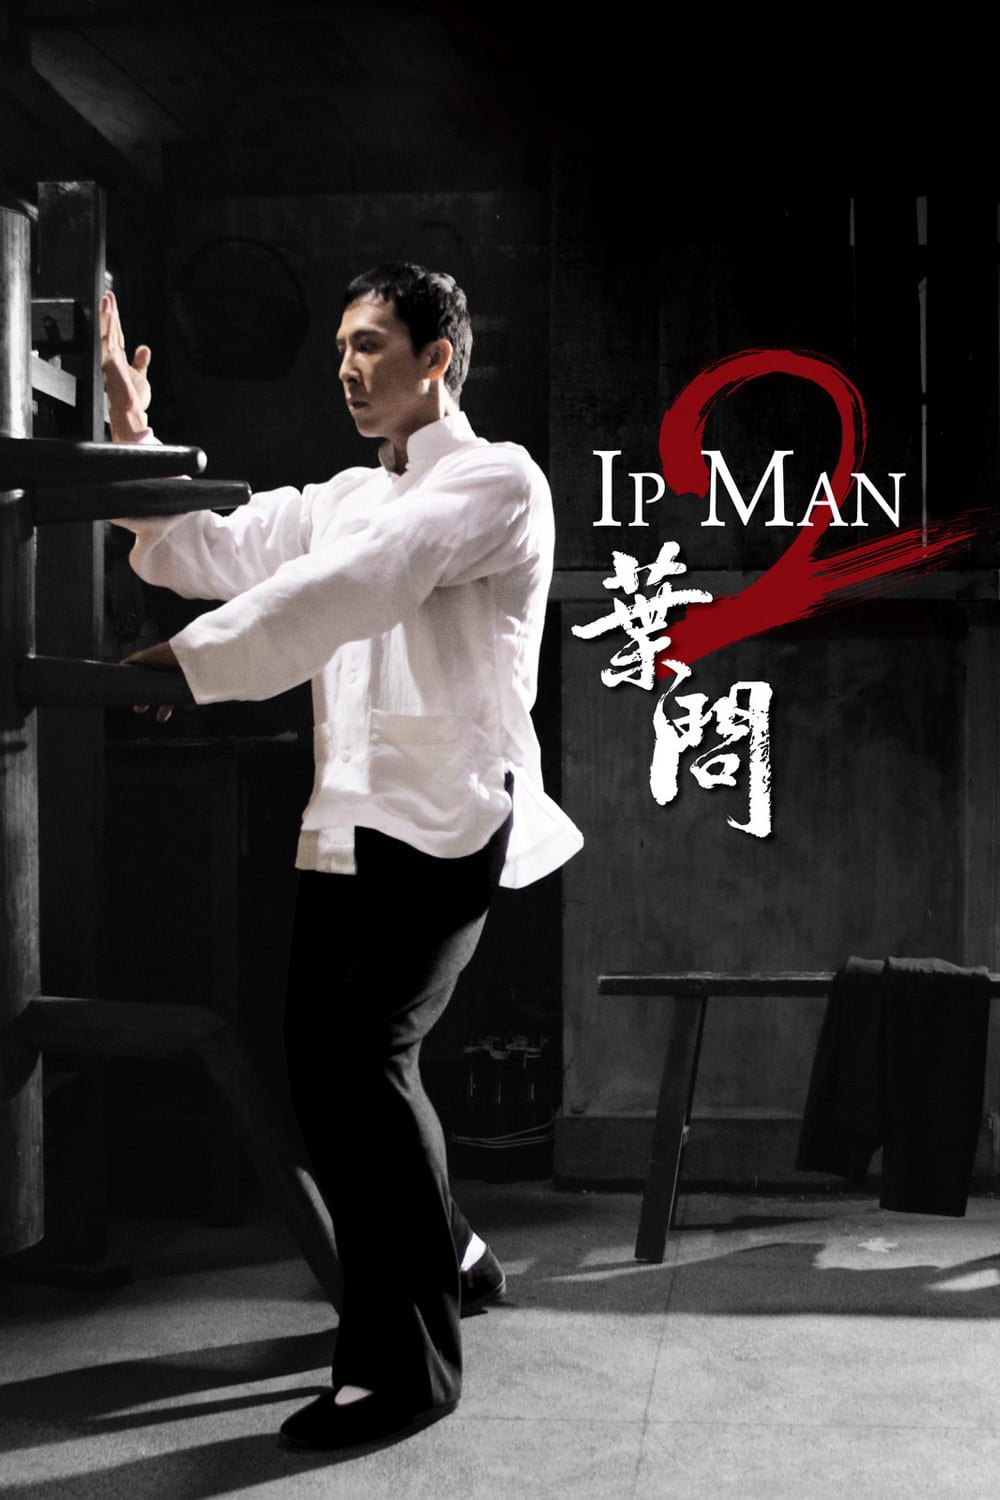 ip man 2 movie download in tamilplay.com